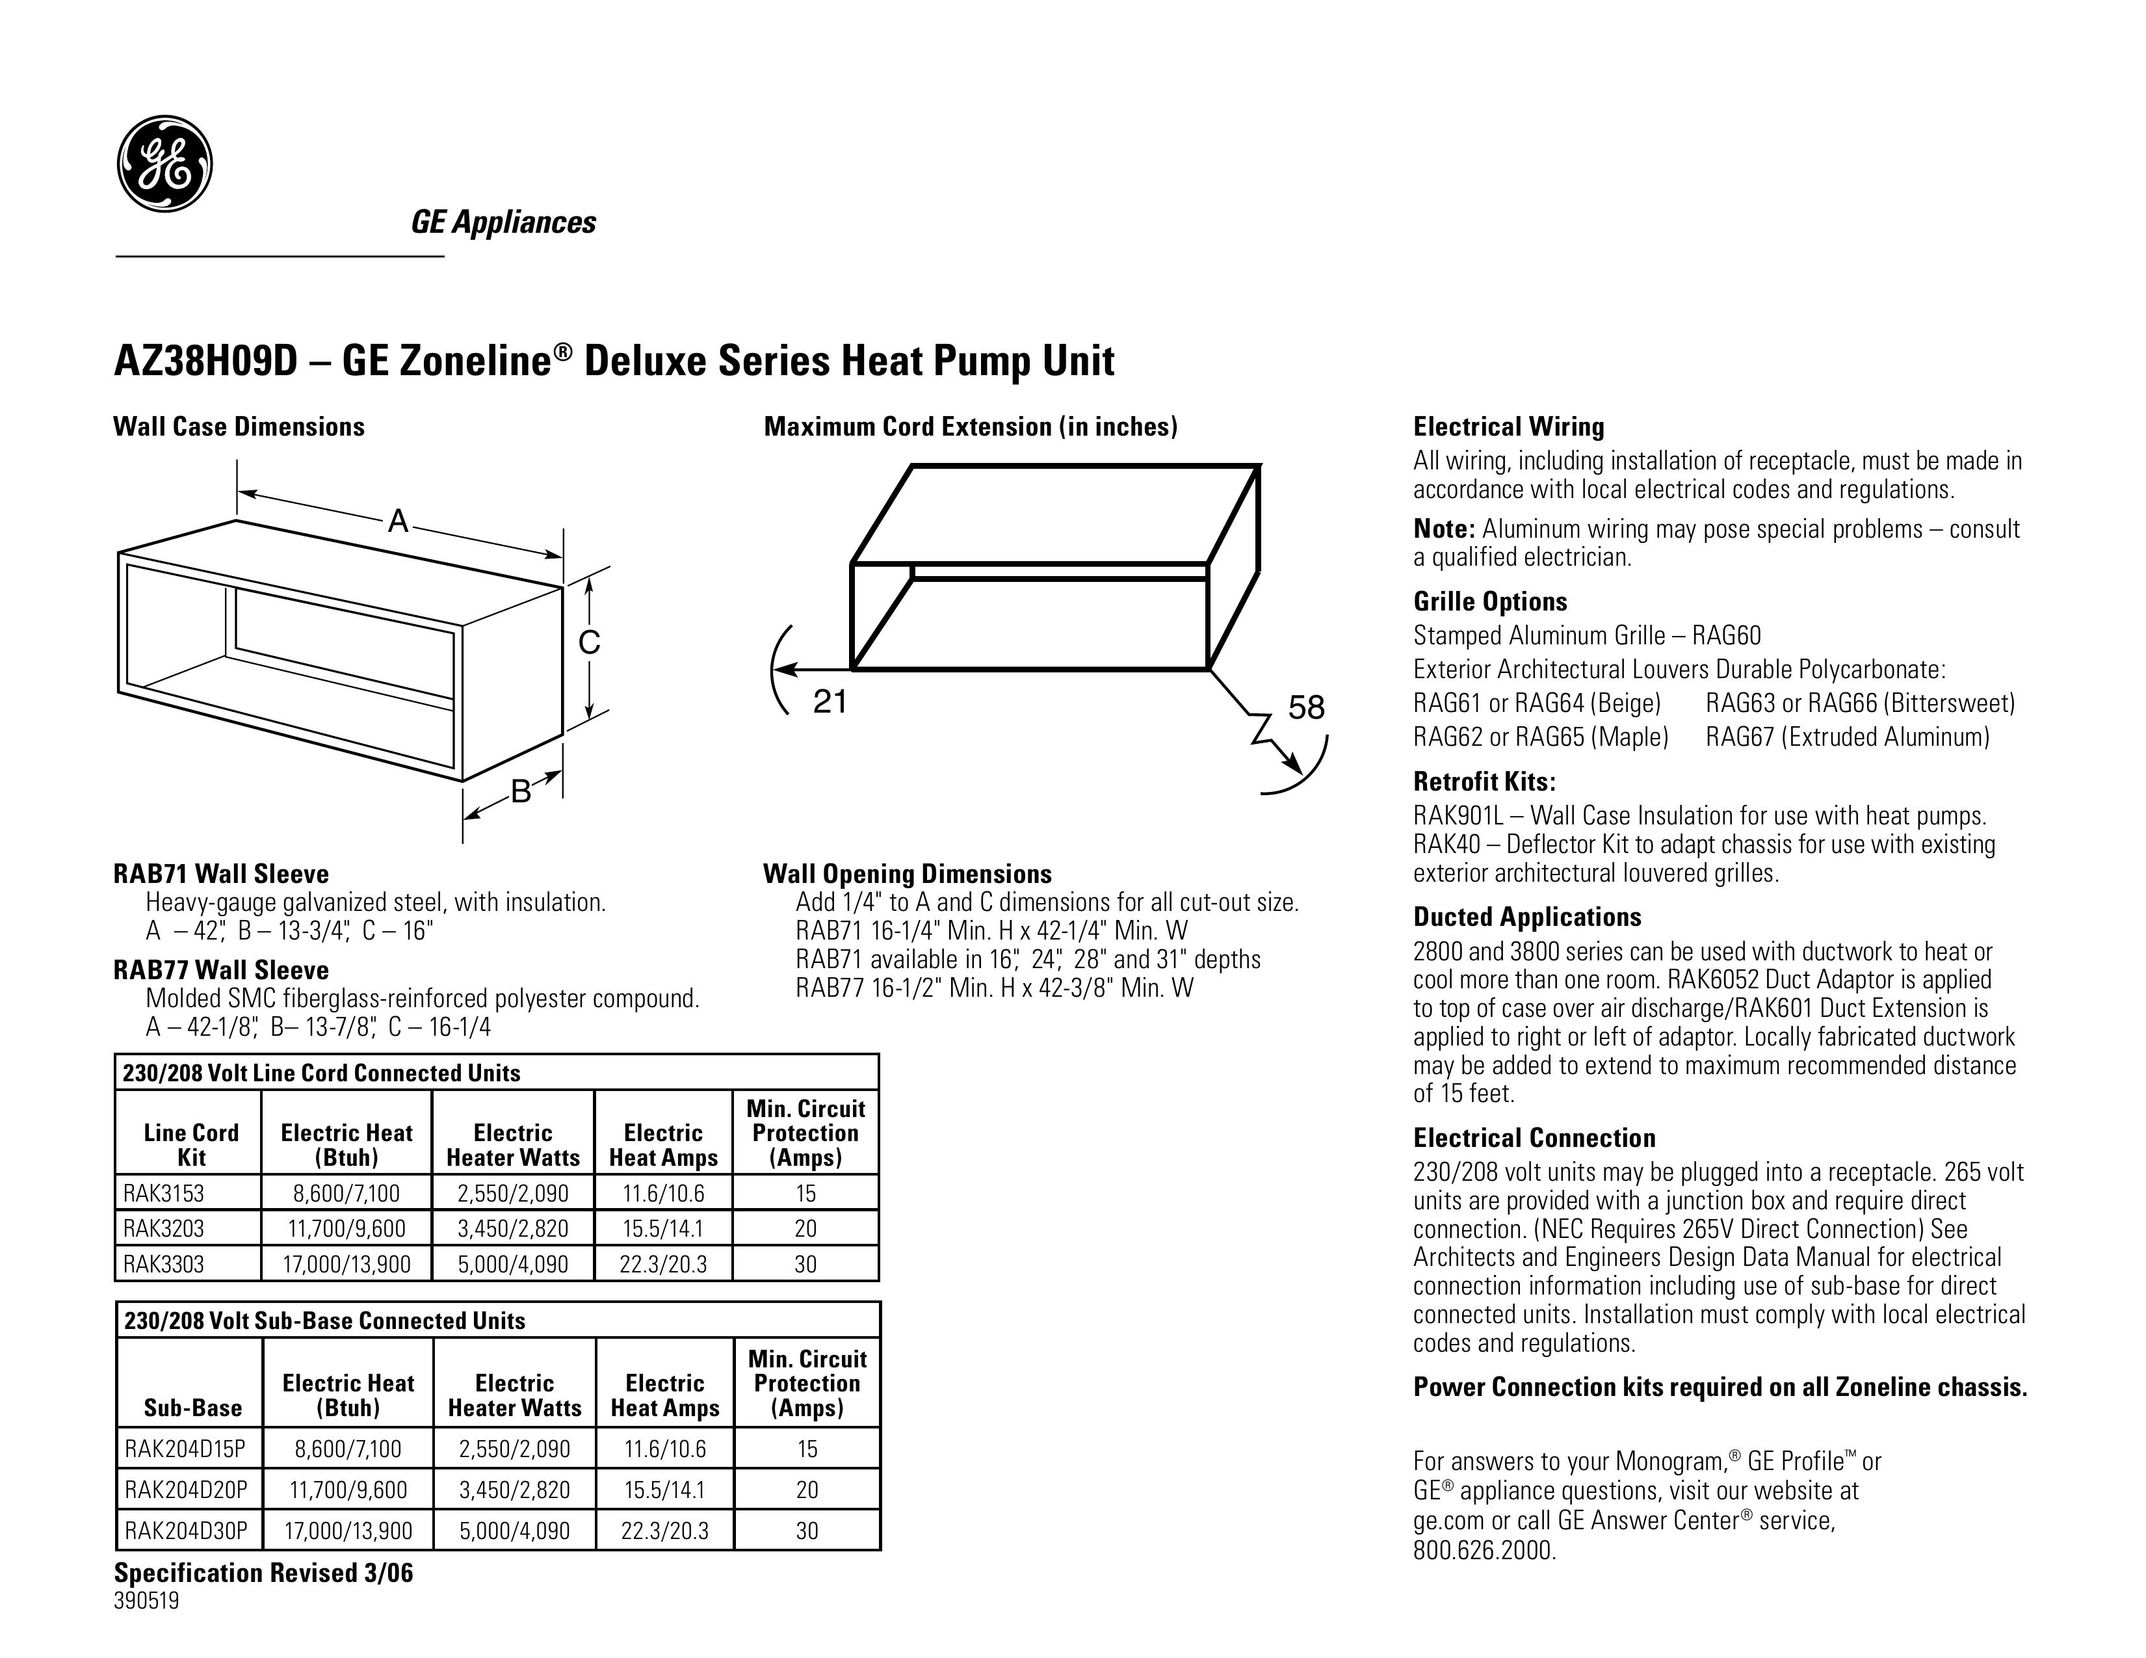 GE AZ38H09D Heat Pump User Manual